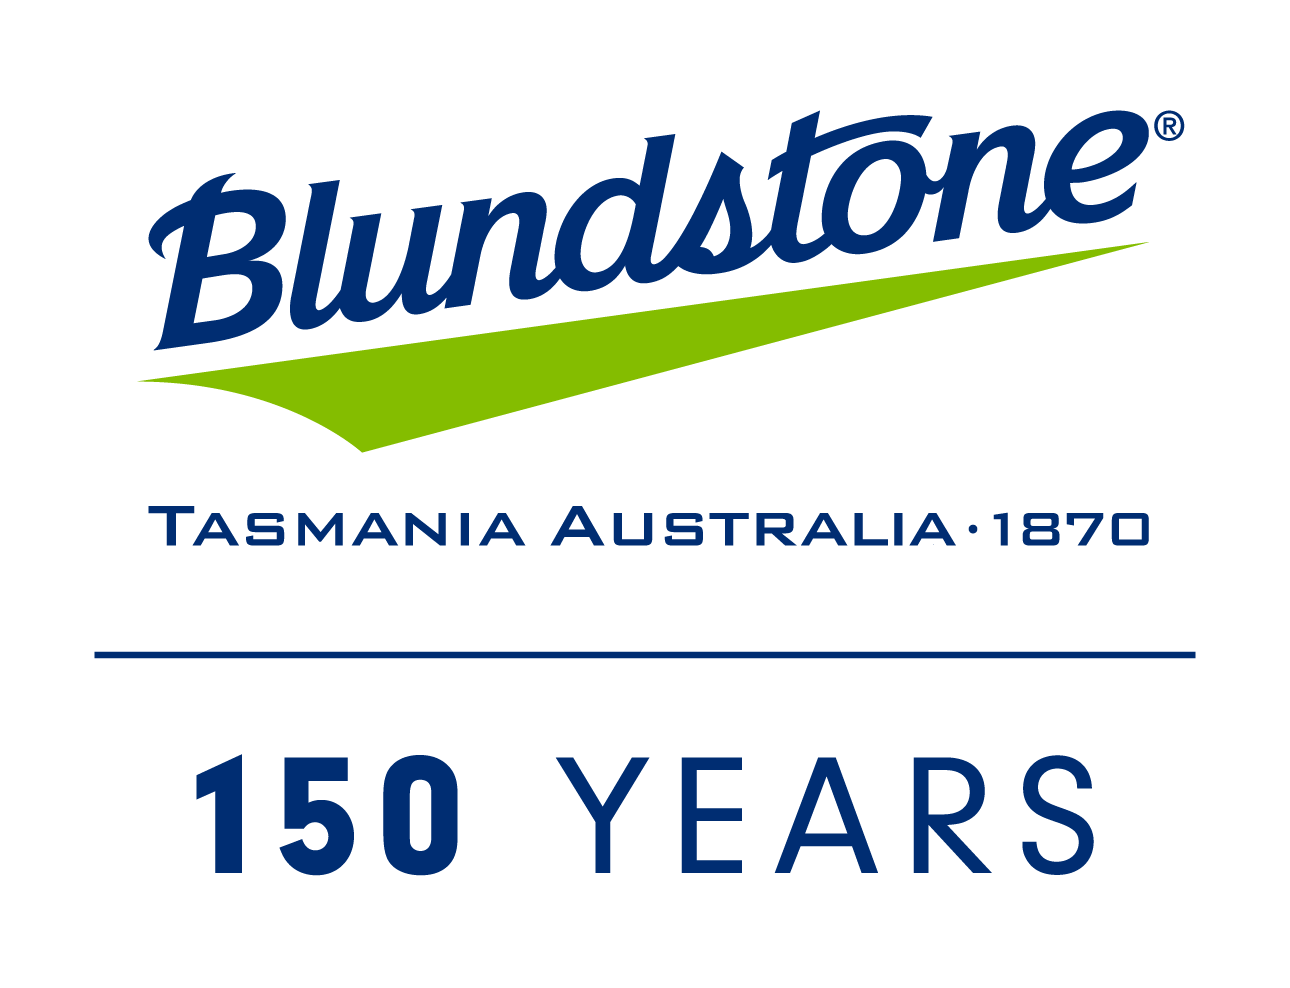 Blundstone 150 logo.png